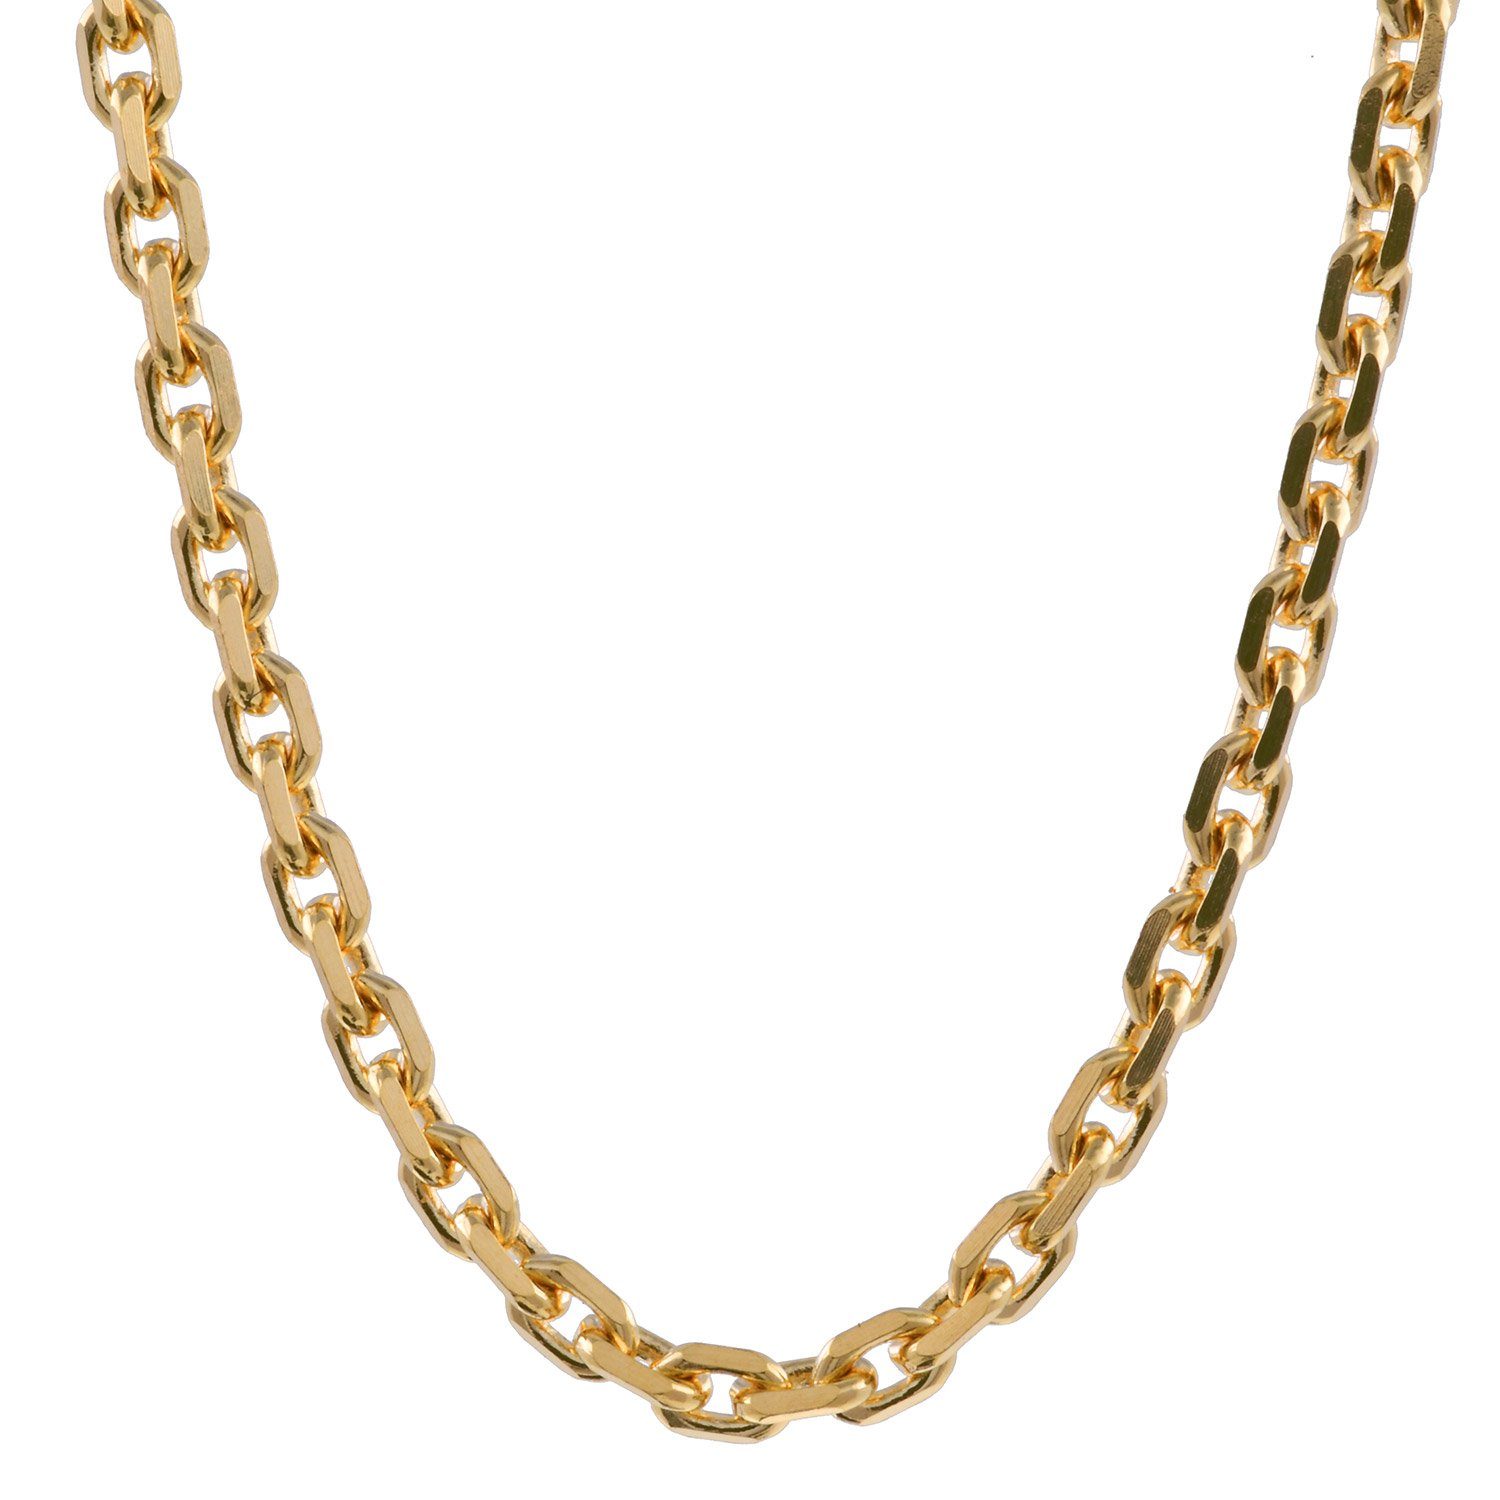 HOPLO Goldkette Ankerkette diamantiert 585 - 14 Karat Gold 1,7 mm Kettenlänge 55 cm (inkl. Schmuckbox), Made in Germany gelbgoldfarben